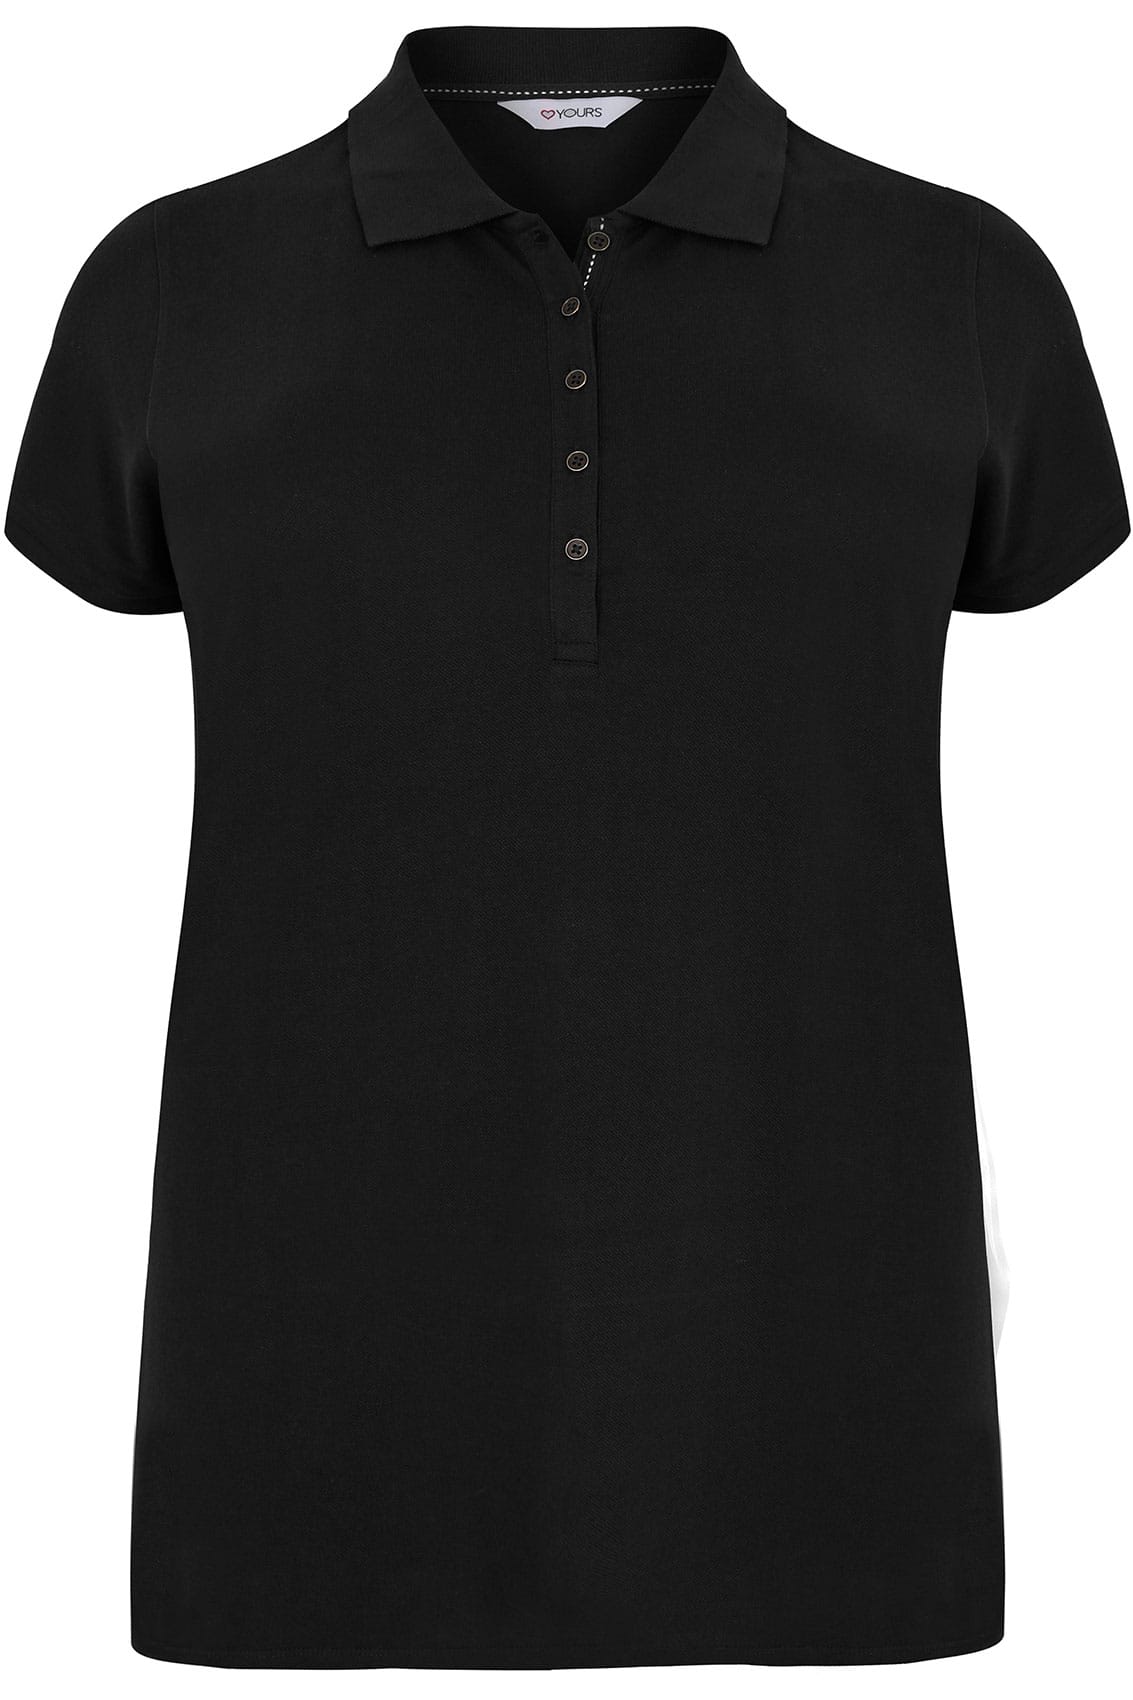 Black Button Up Polo Shirt, Plus size 16 to 36